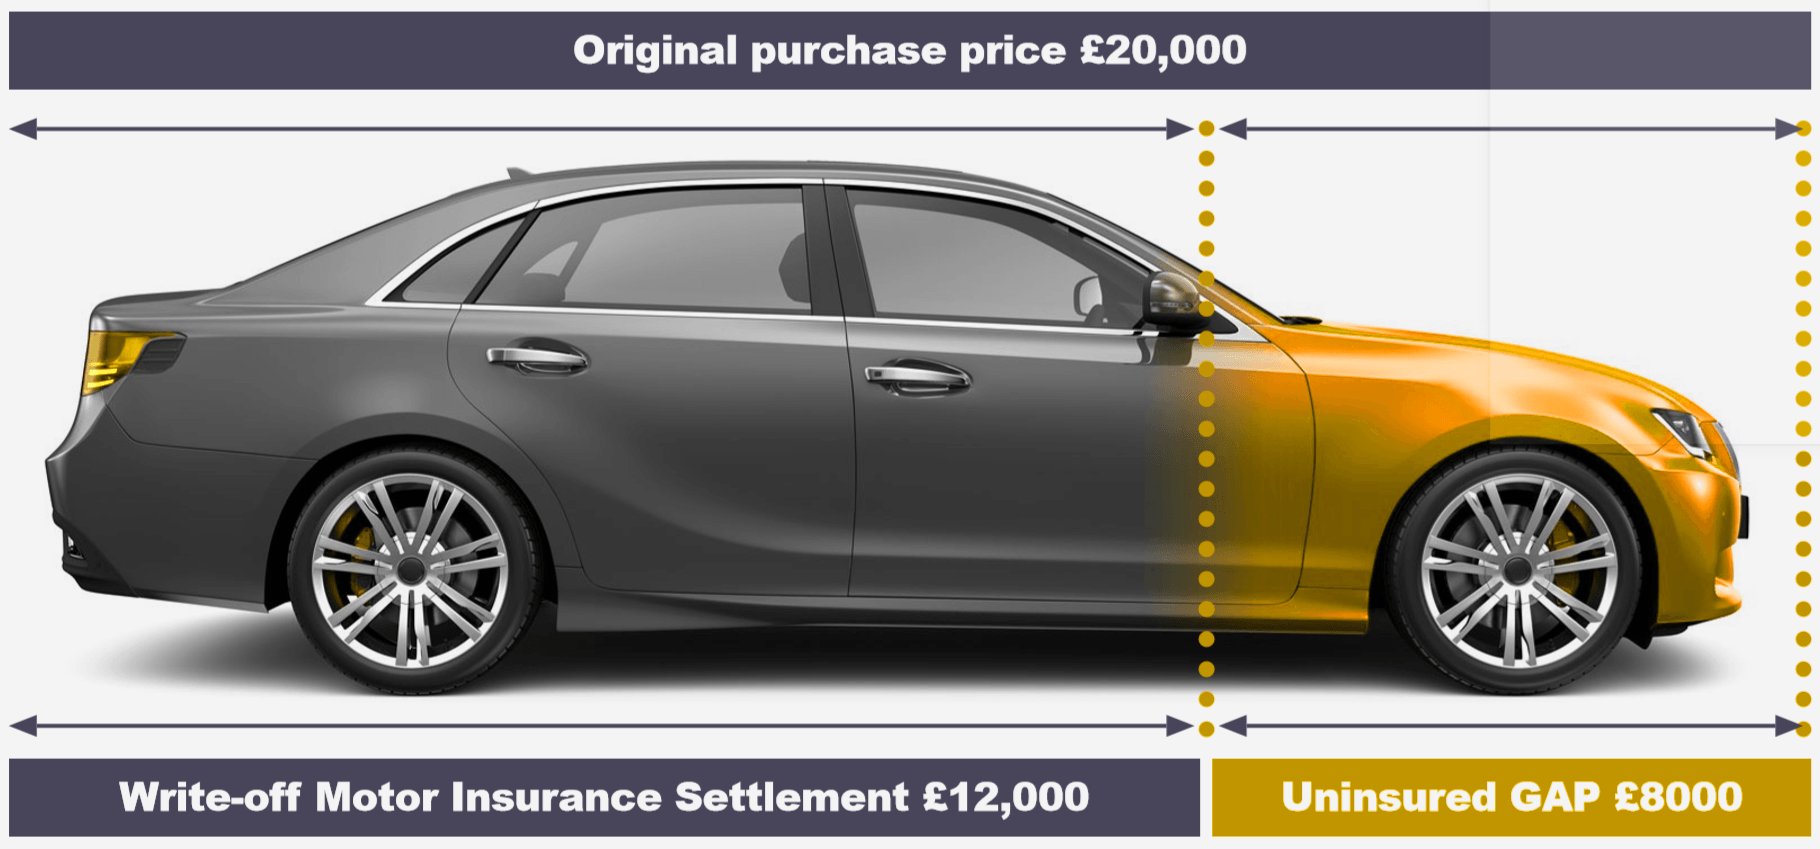 Original purchase price £20,000. Write-off motor insurance settlement £12,000. Uninsured GAP £8000.